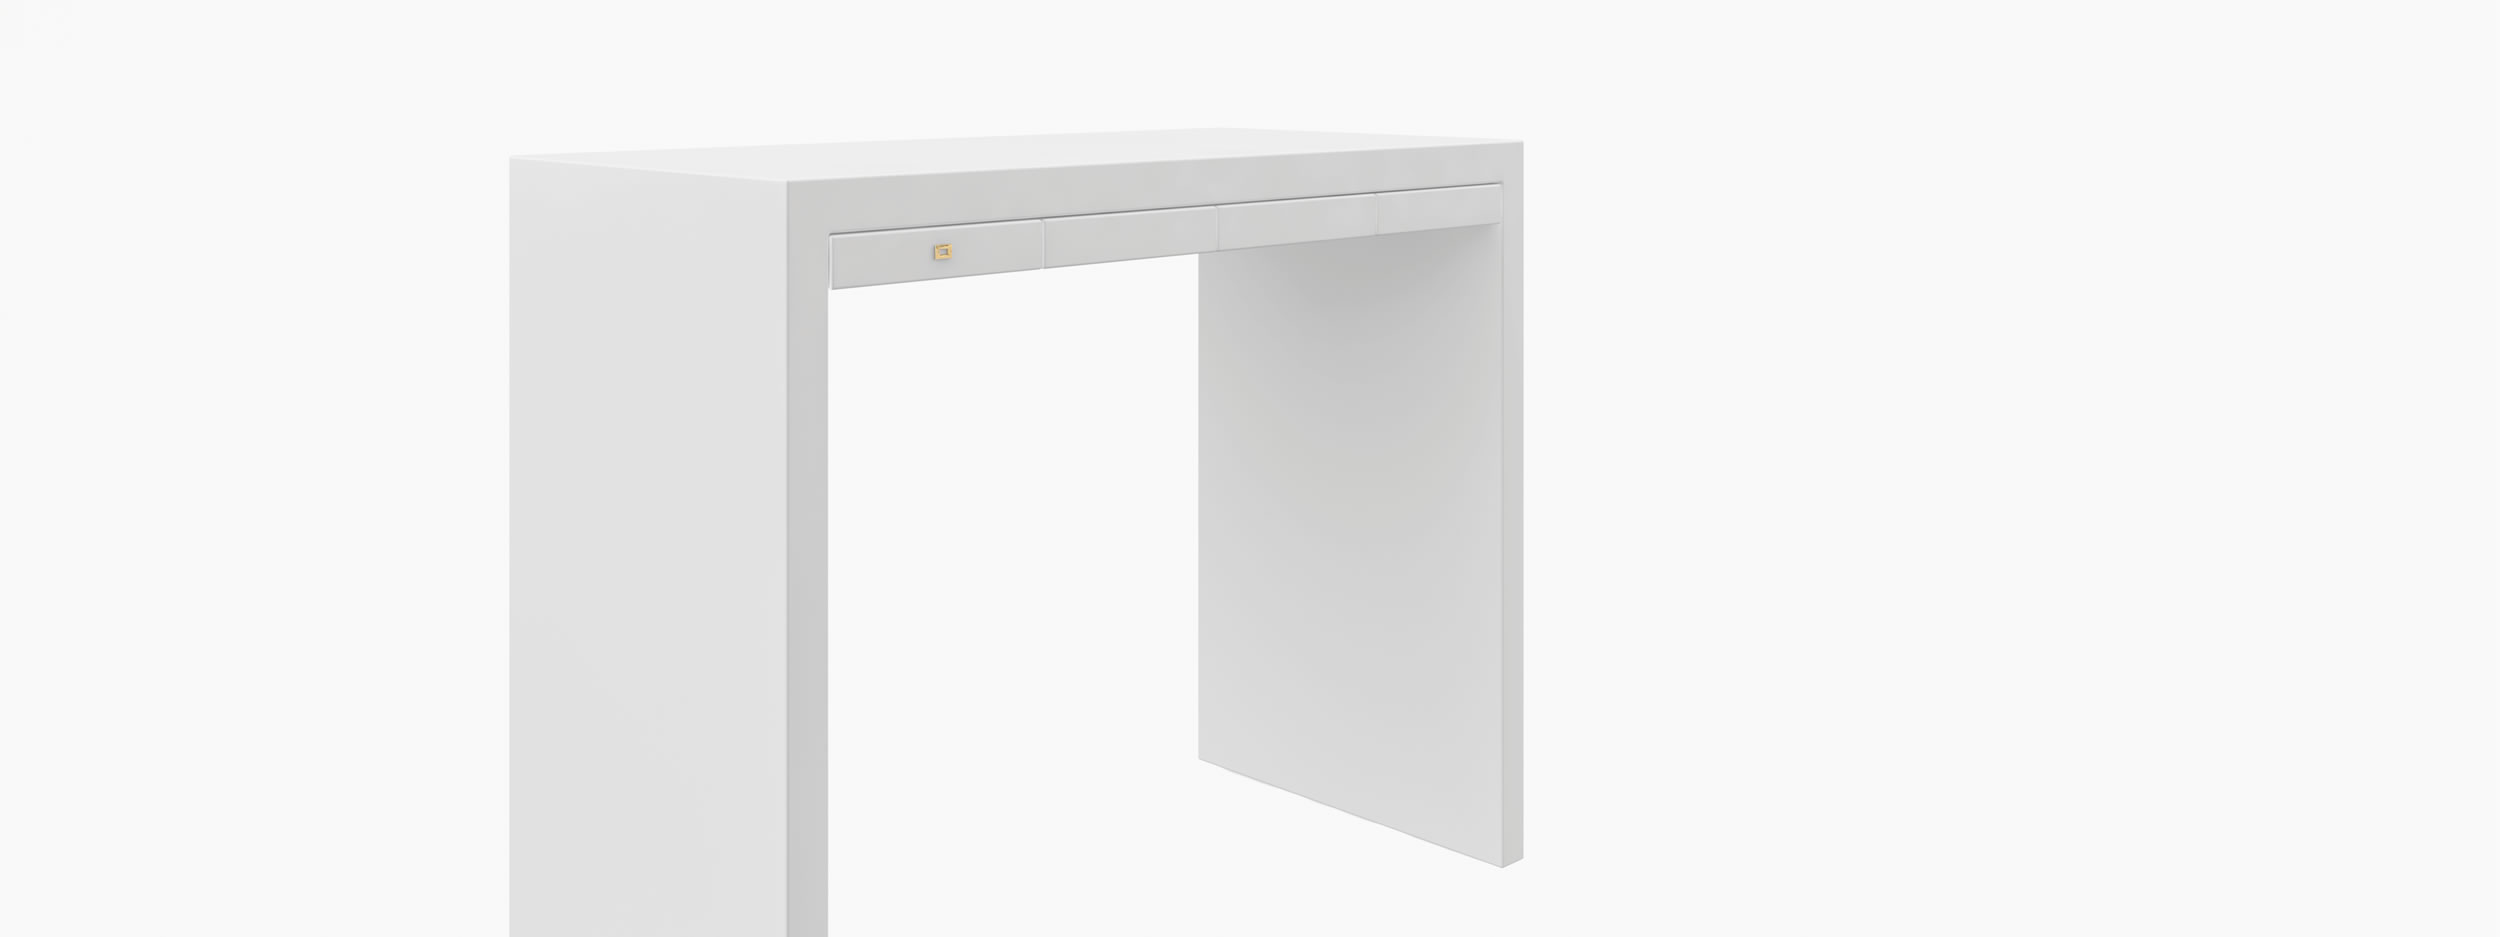 Konsole rechteckig weiss all white Buero art furniture Konsolen FS 26 FELIX SCHWAKE RECHTECK